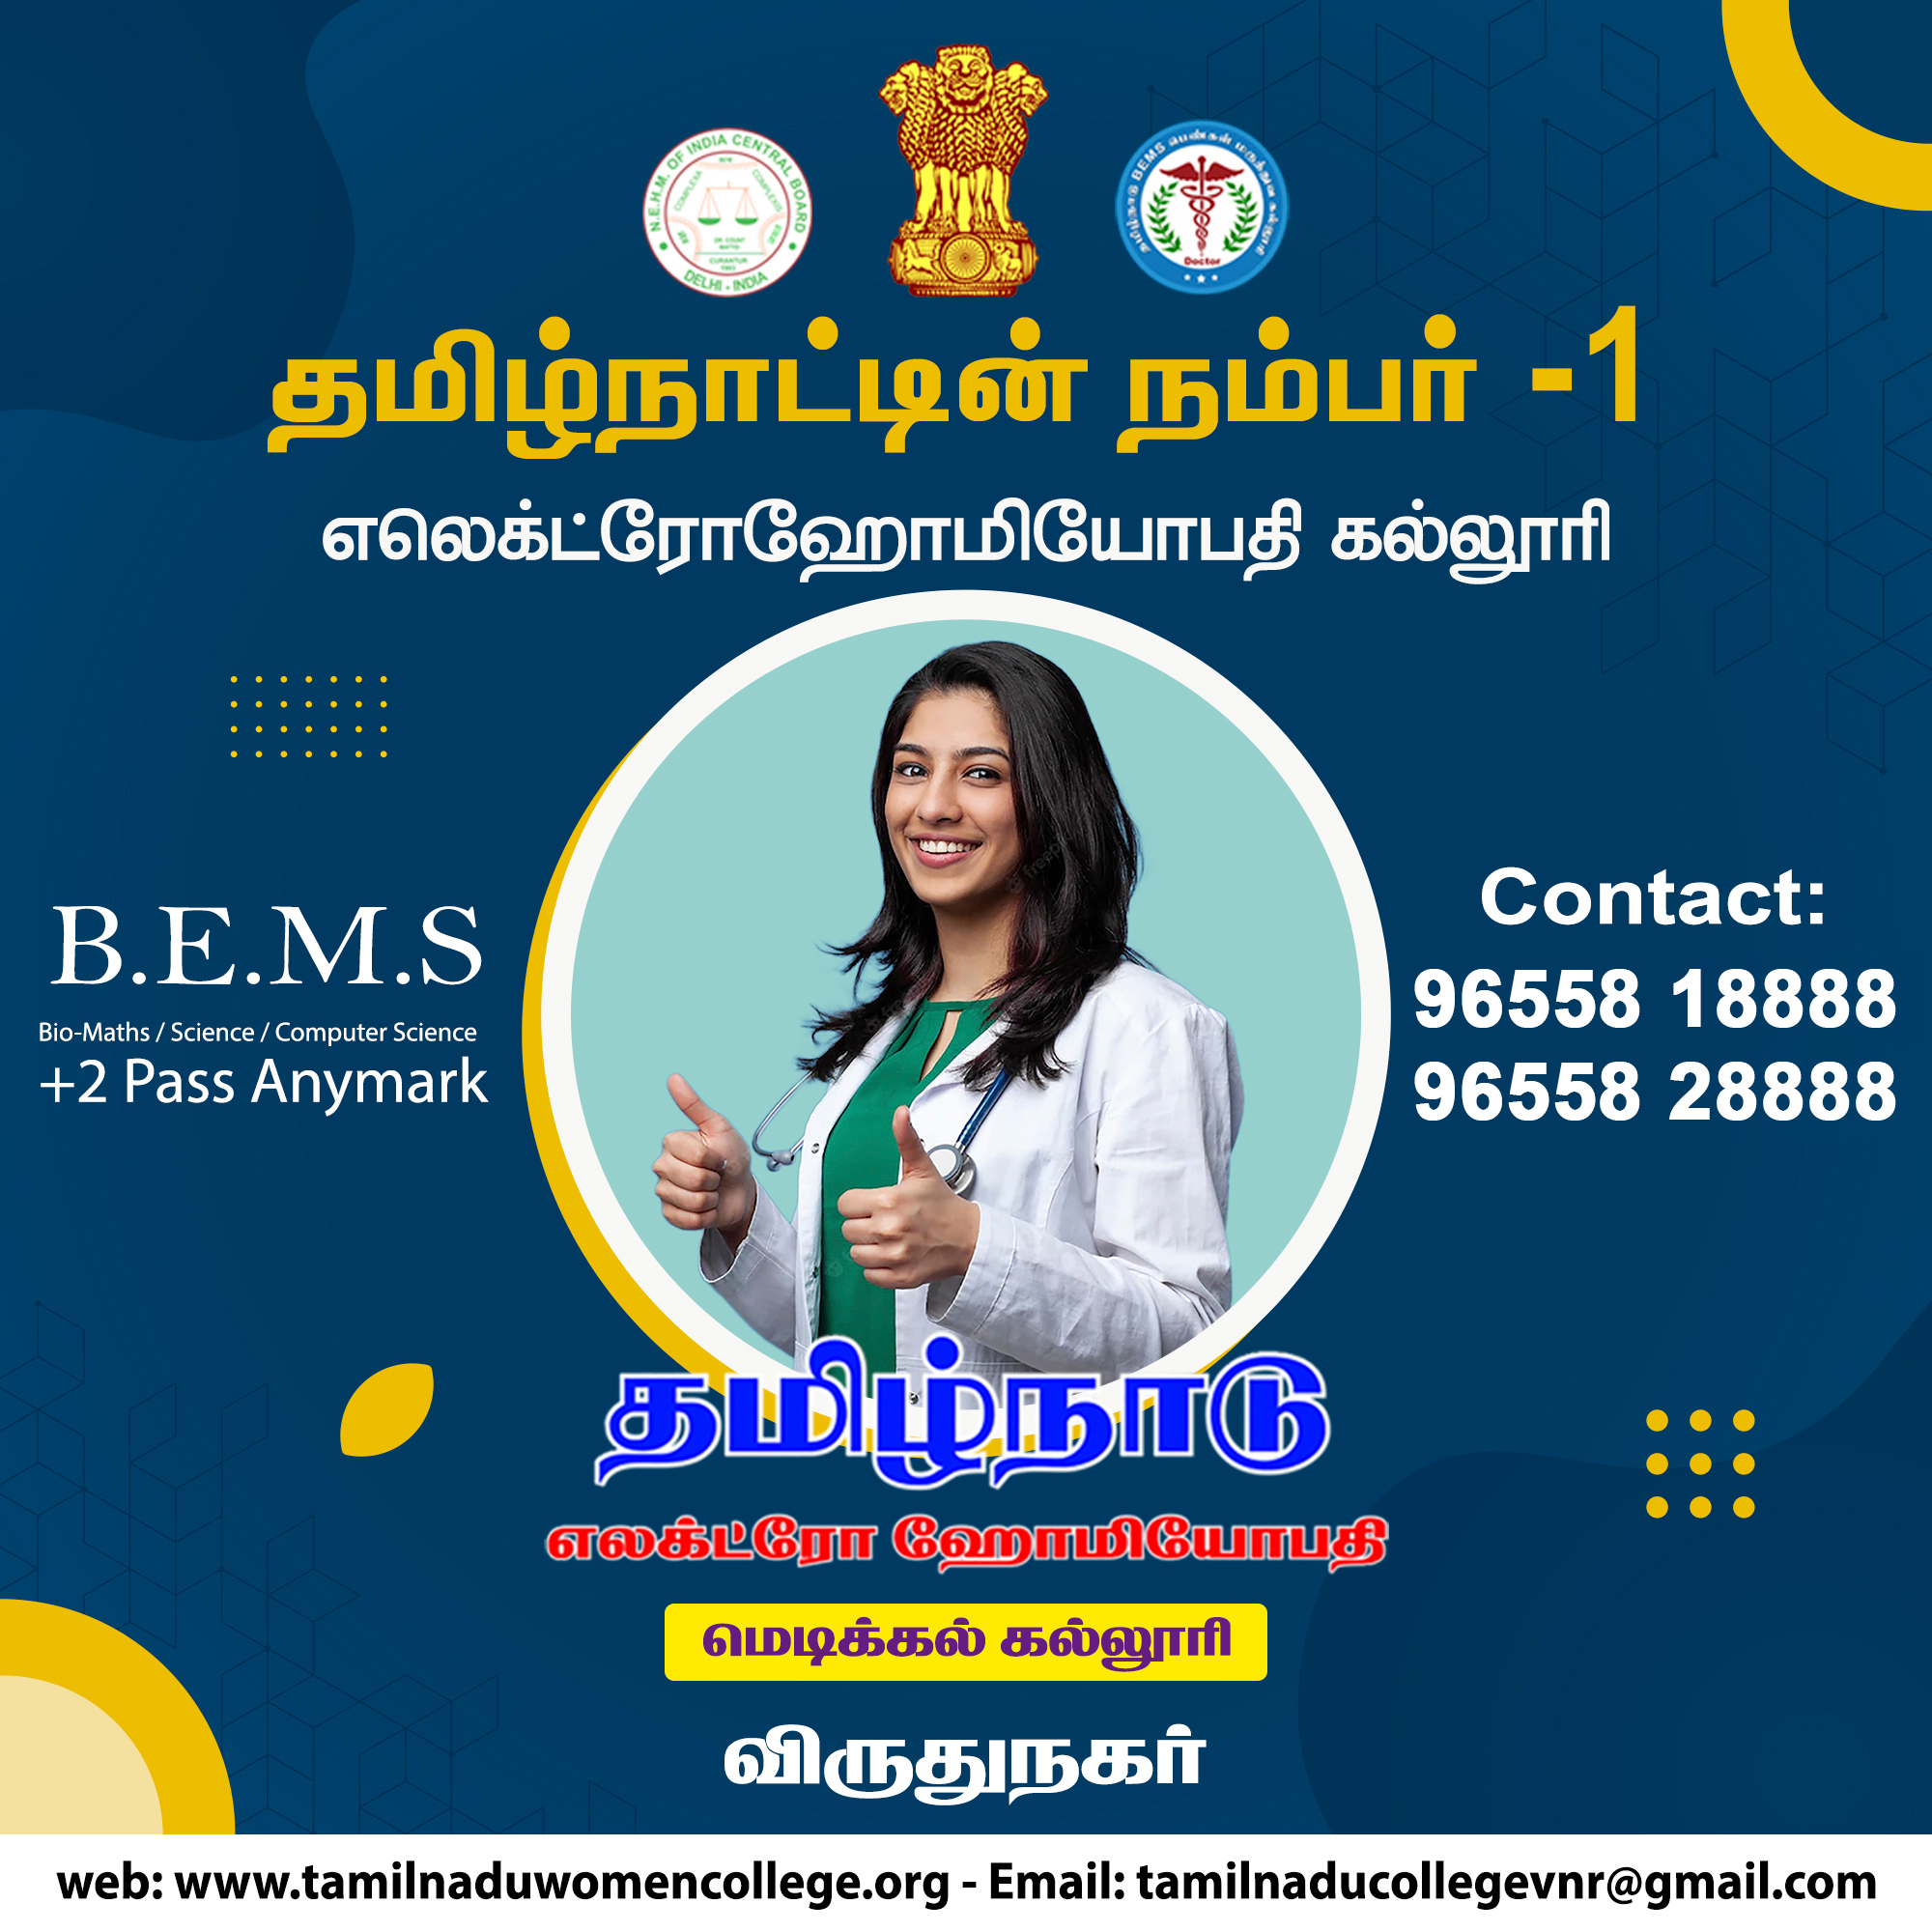 B.E.M.S Courses in Tamilnadu | B.E.M.S Courses in Virudhunagar